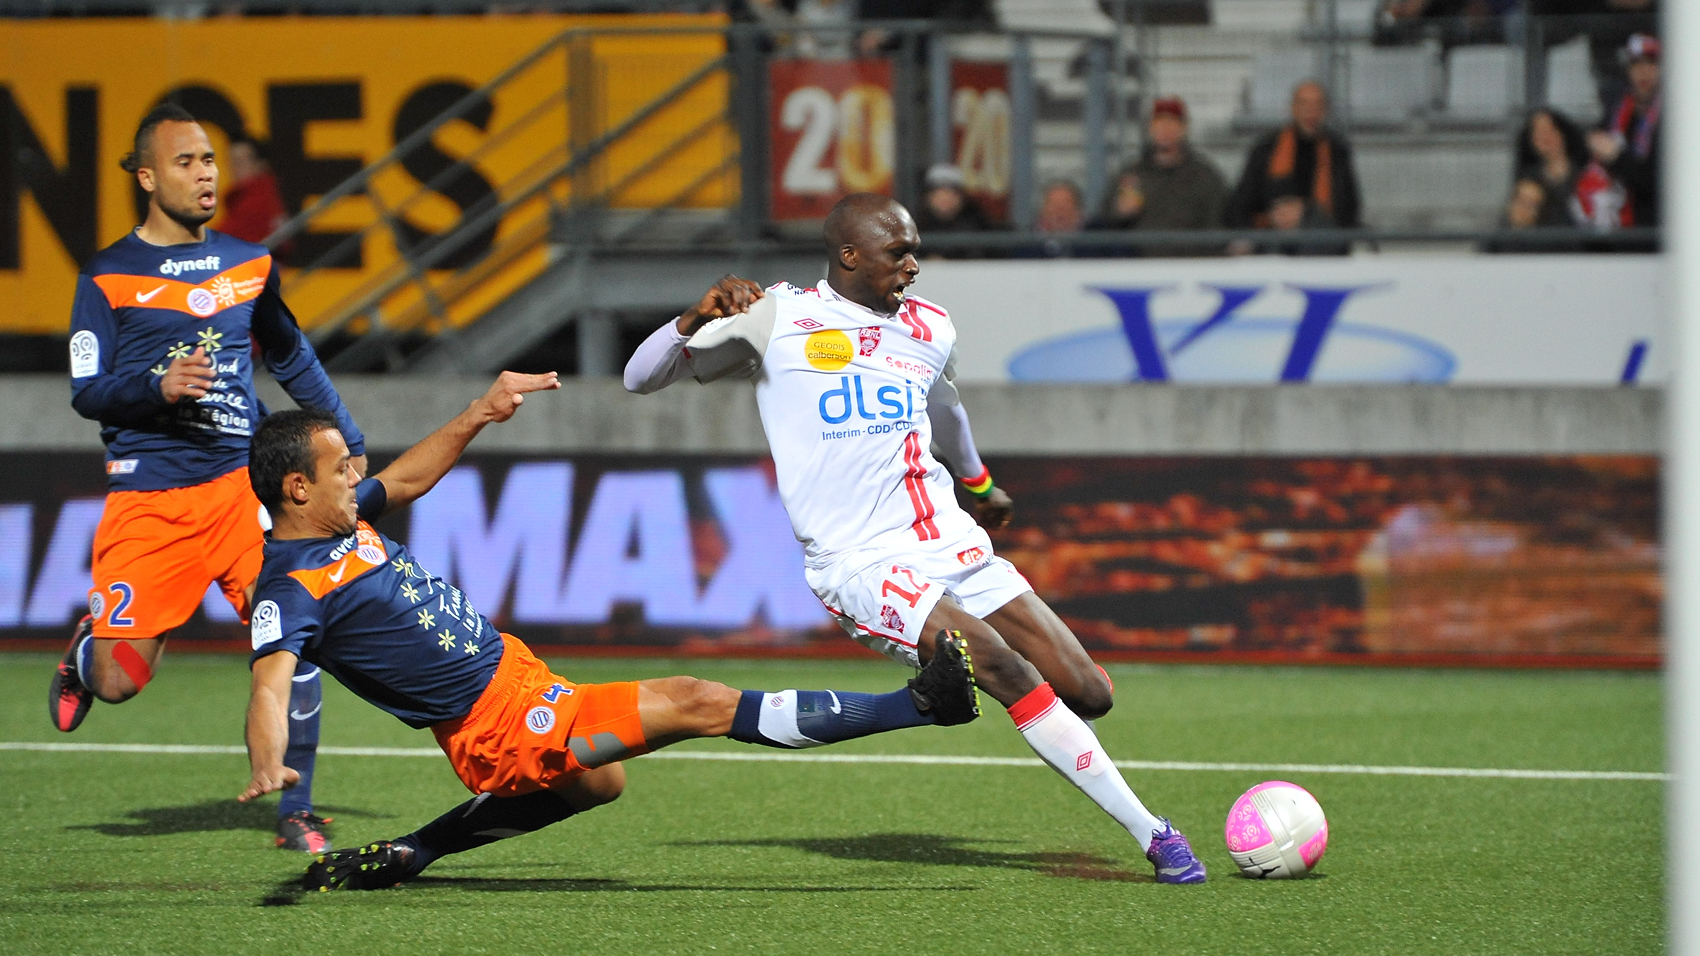 Football - Ligue 1 - Saison 2012/2013 - Nancy vs Montpellier Hérault SC